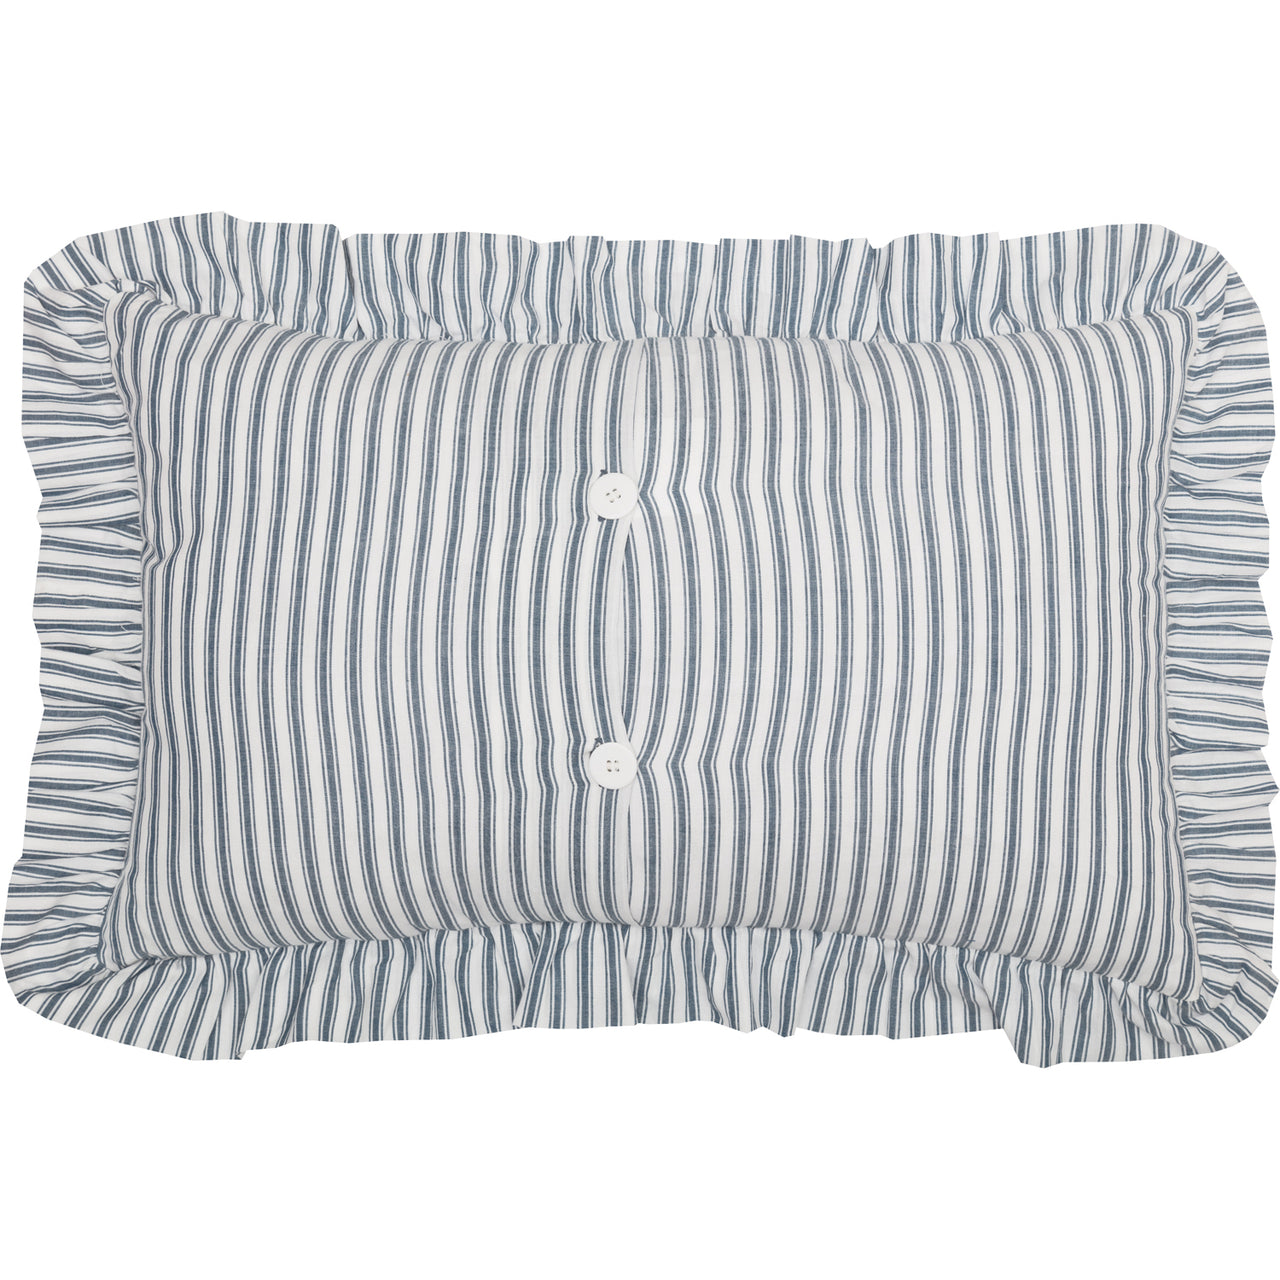 Sawyer Mill Blue Ticking Stripe Fabric Pillow 14x22 VHC Brands